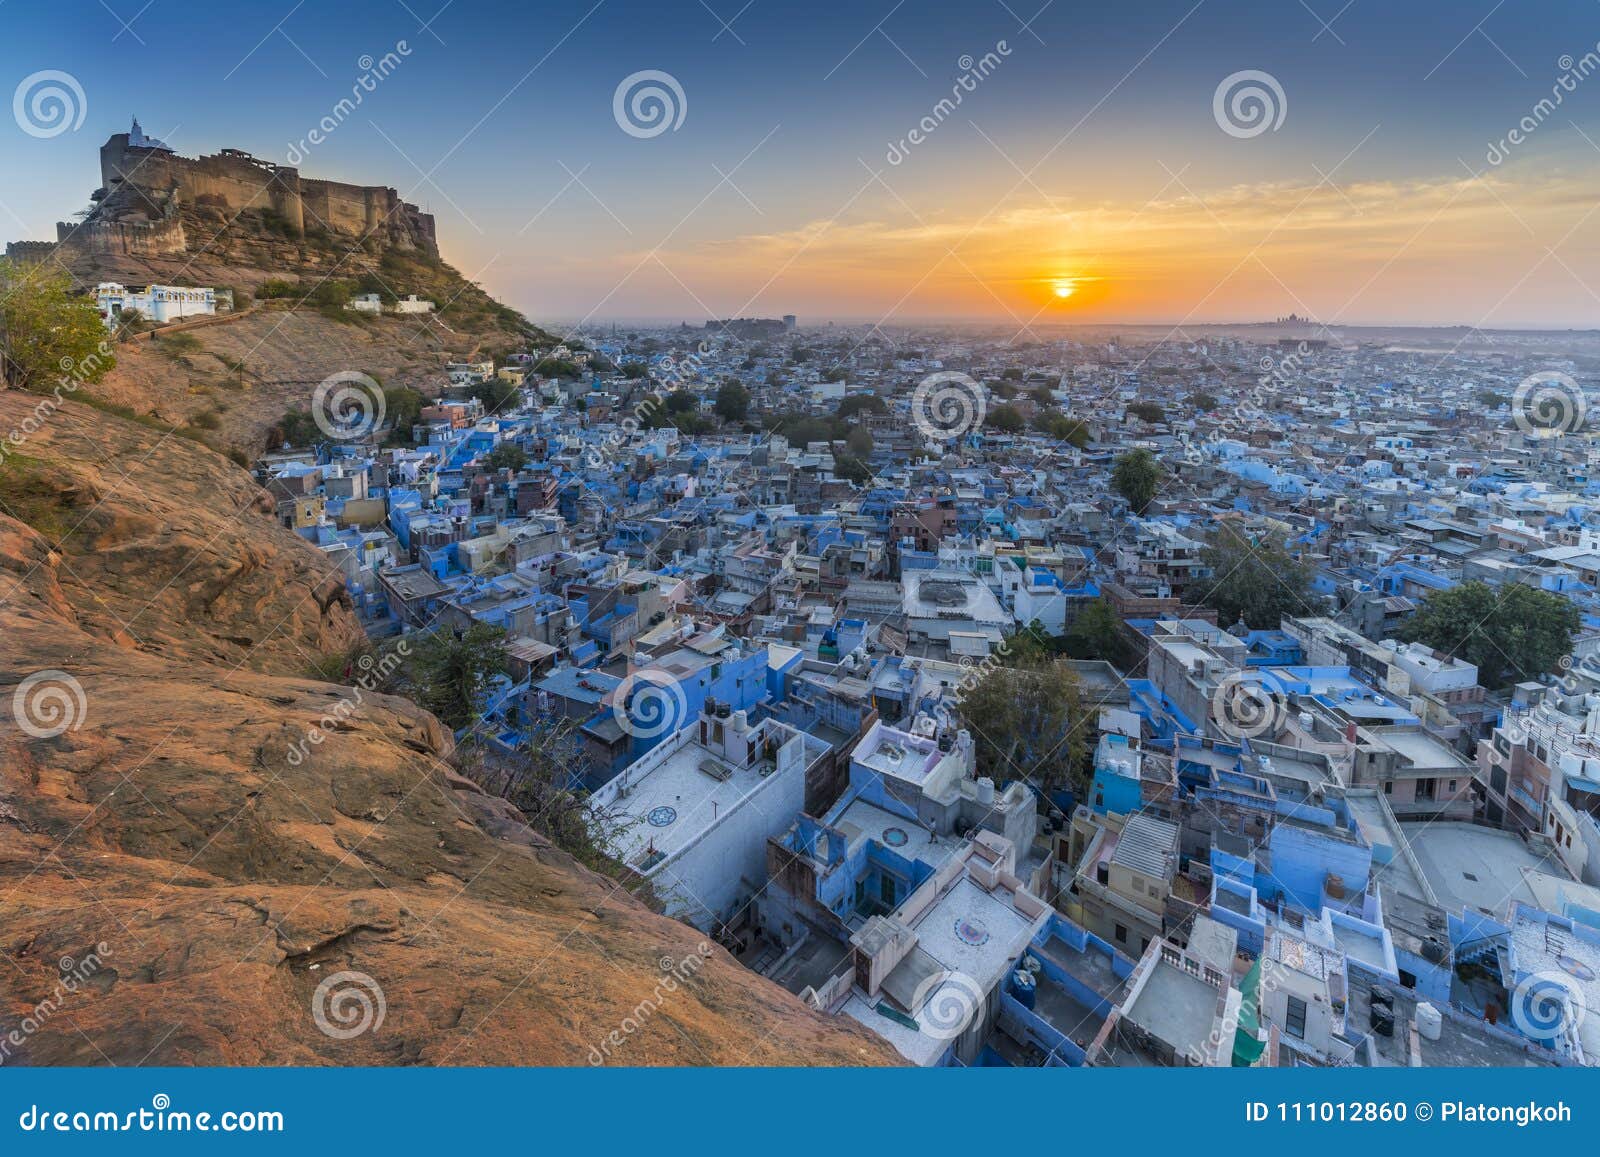 cityscape of jodhpur at sunrise in rajasthan, india.